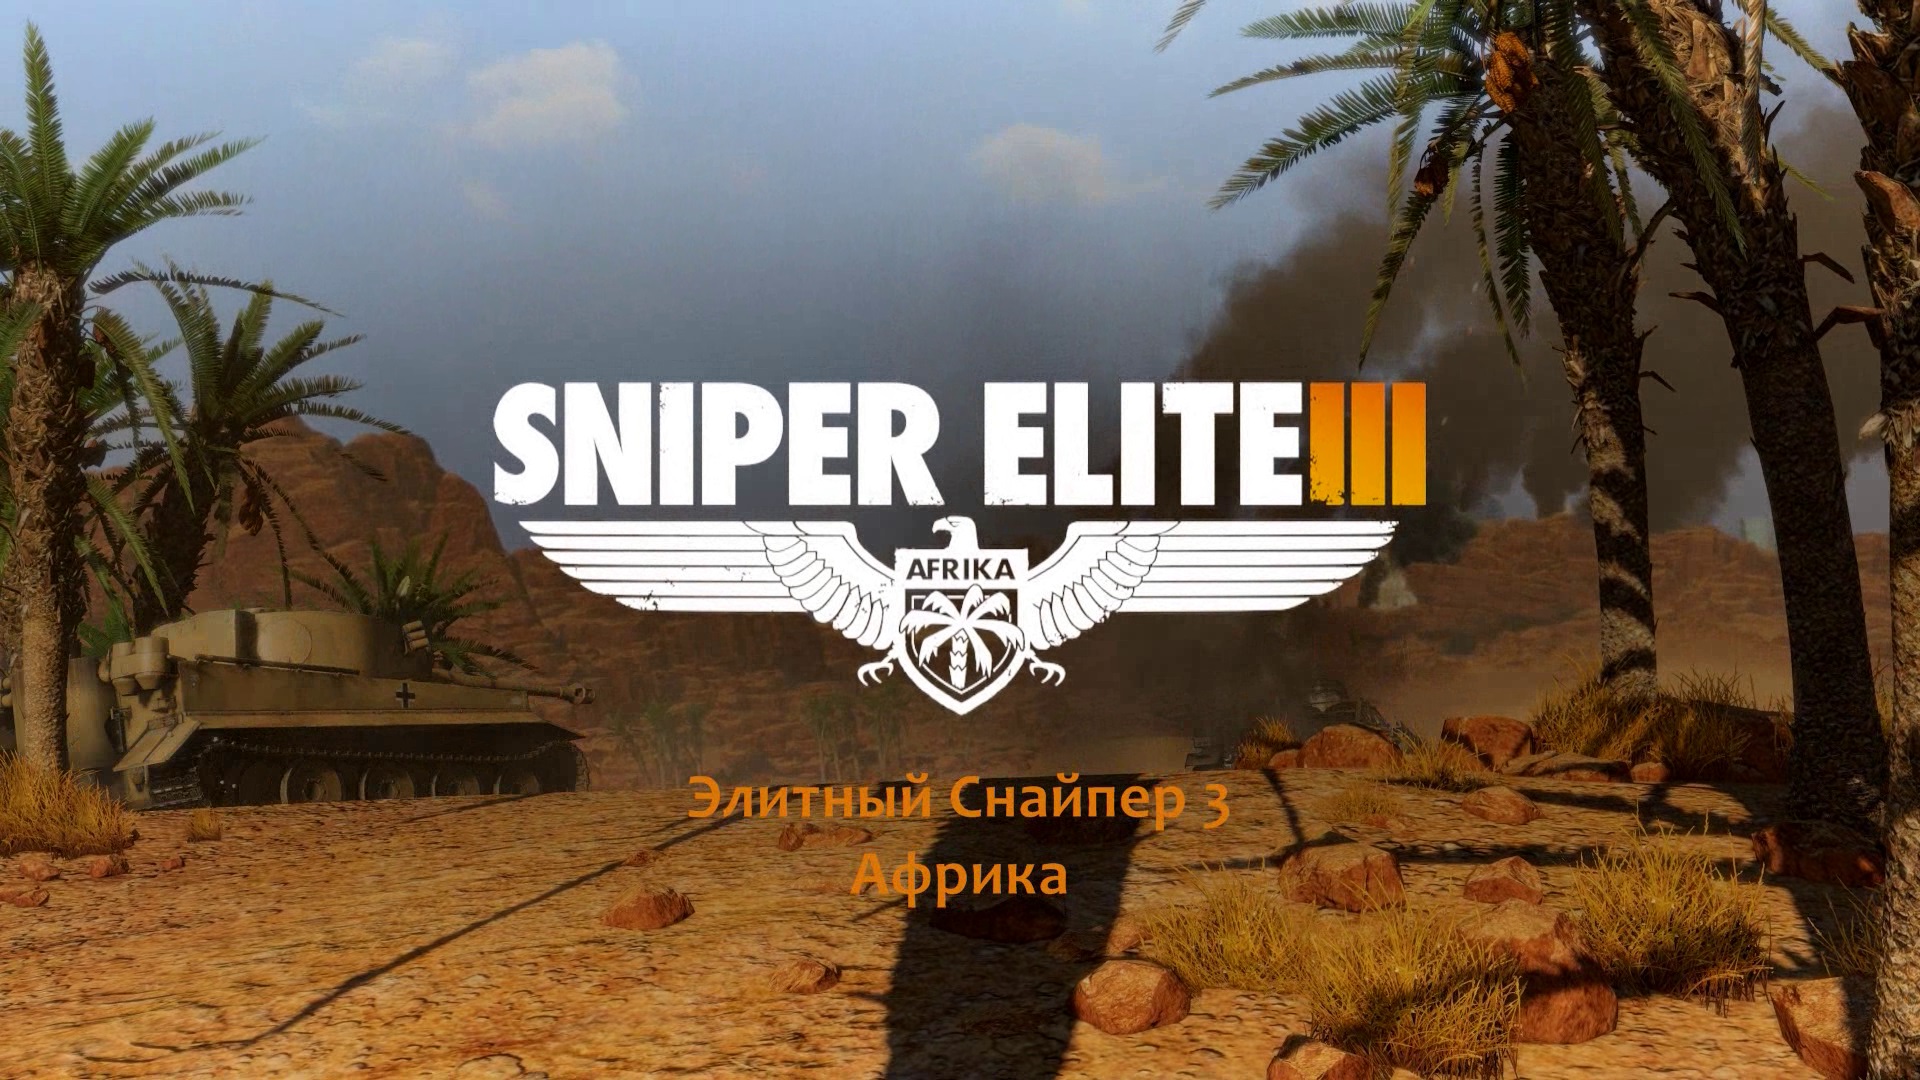 Sniper Elite 3 - Afrika - мини-фильм